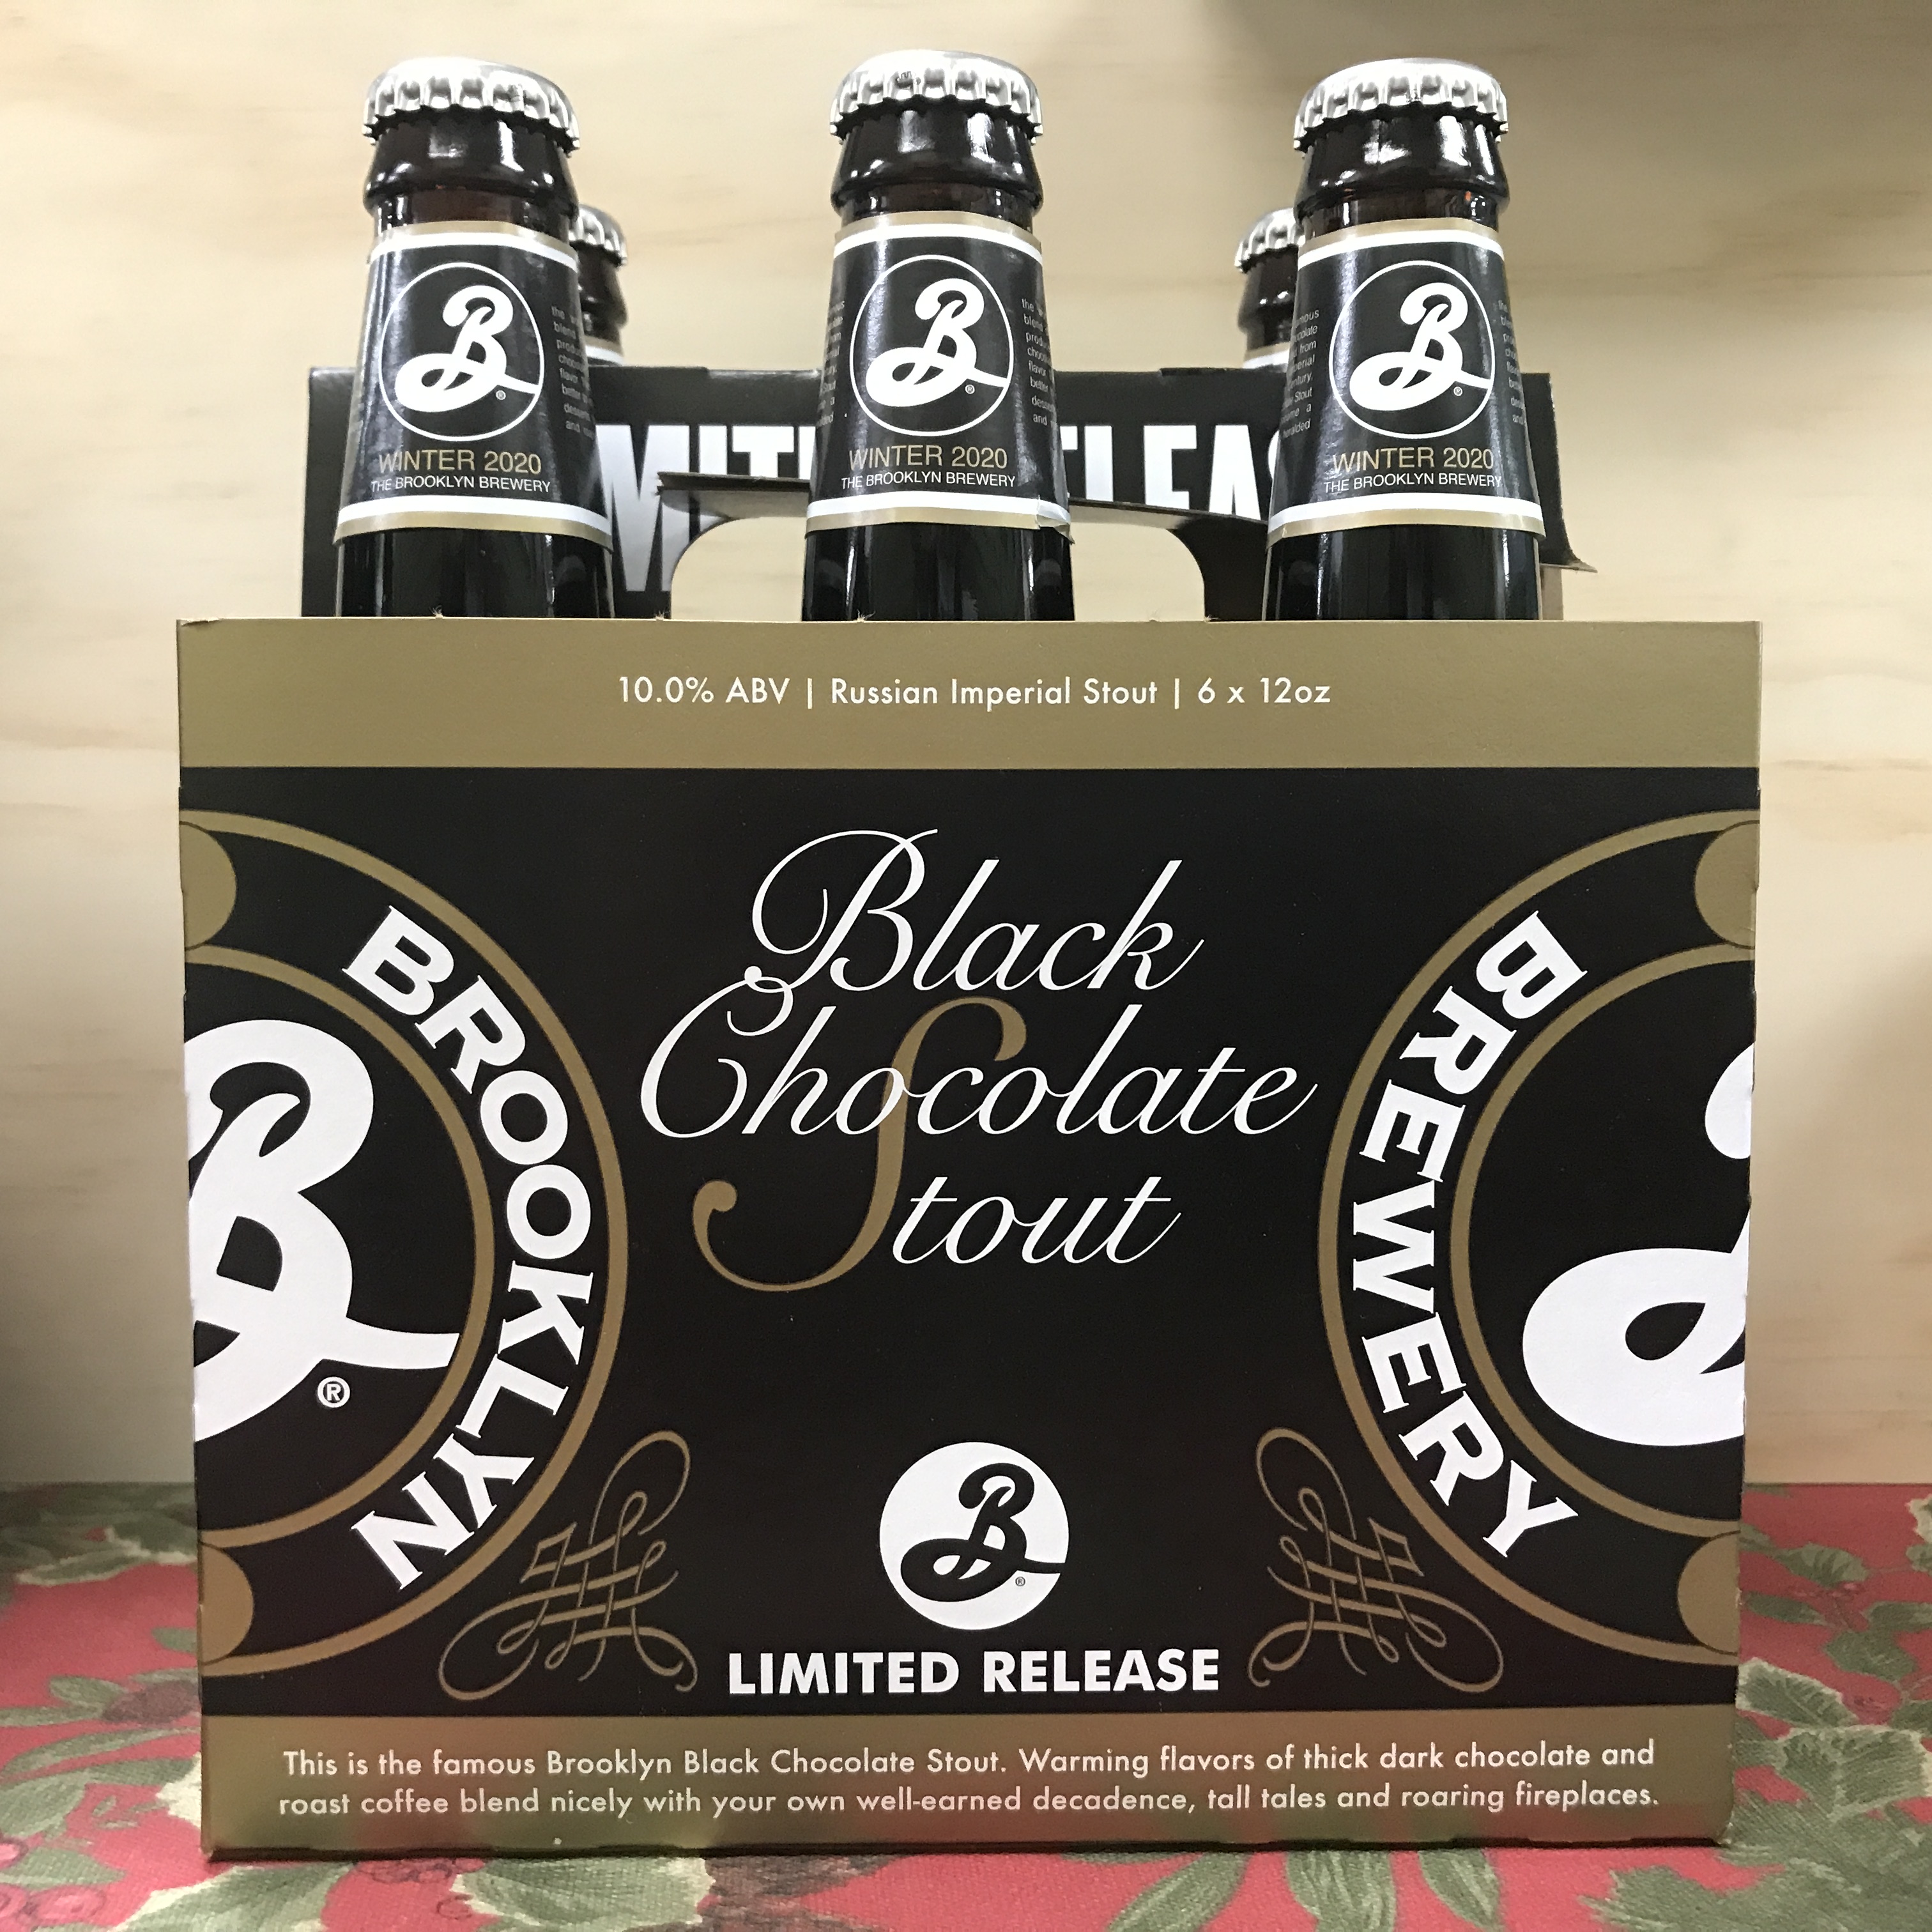 Brooklyn Brewery Black Chocolate Stout 6 x 12 oz bottles